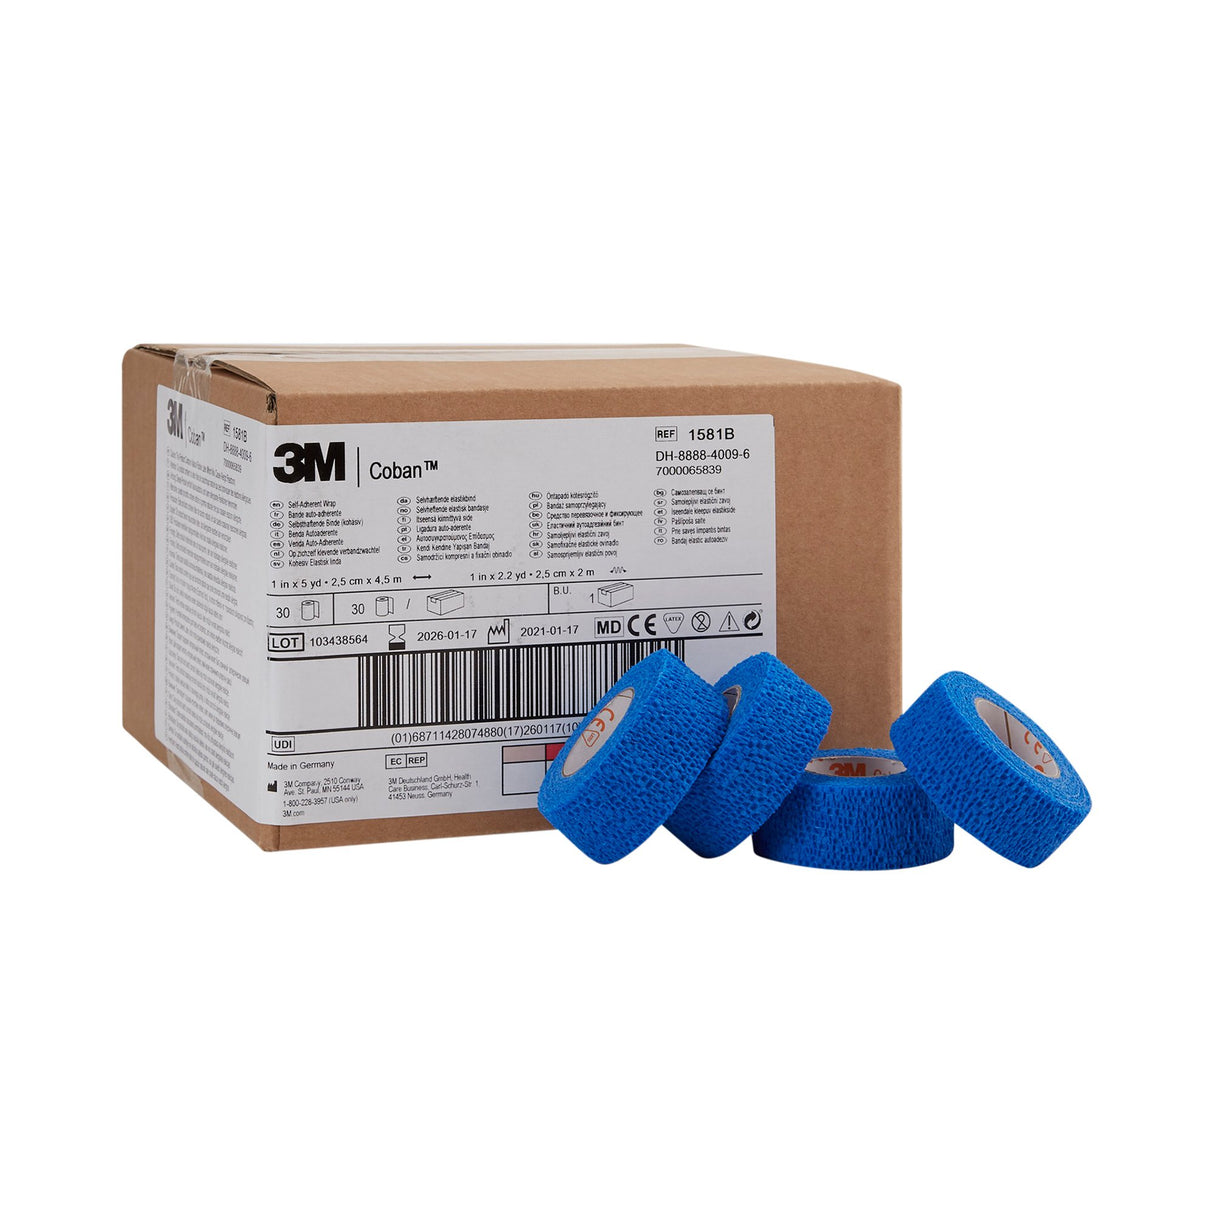 3M™ Coban™ Self-adherent Closure Cohesive Bandage, 1 Inch x 5 Yard, Blue